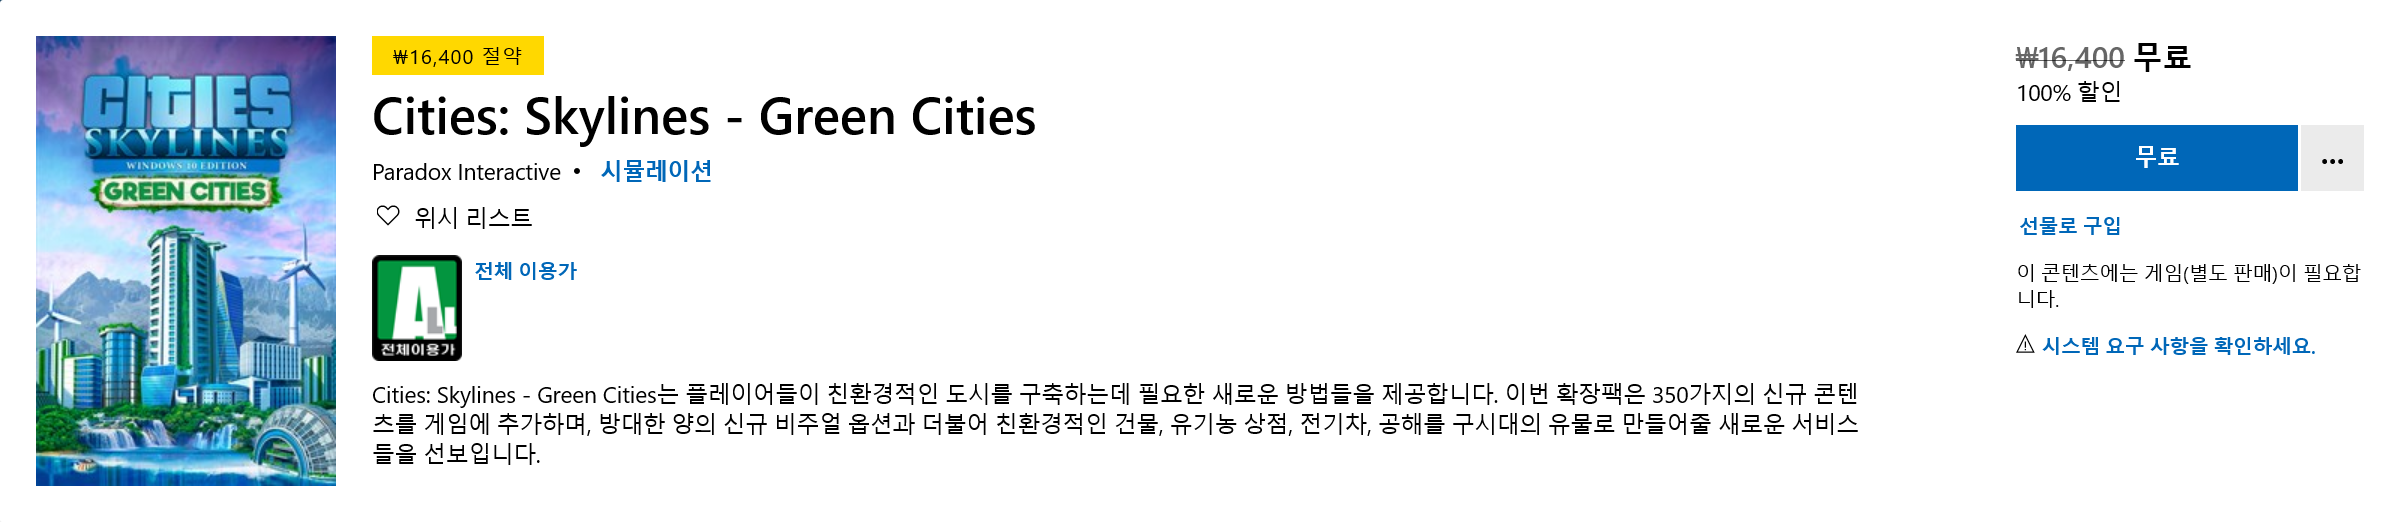 Screenshot_2020-06-23 Cities Skylines - Green Cities 구매 - Microsoft Store ko-KR(1).png